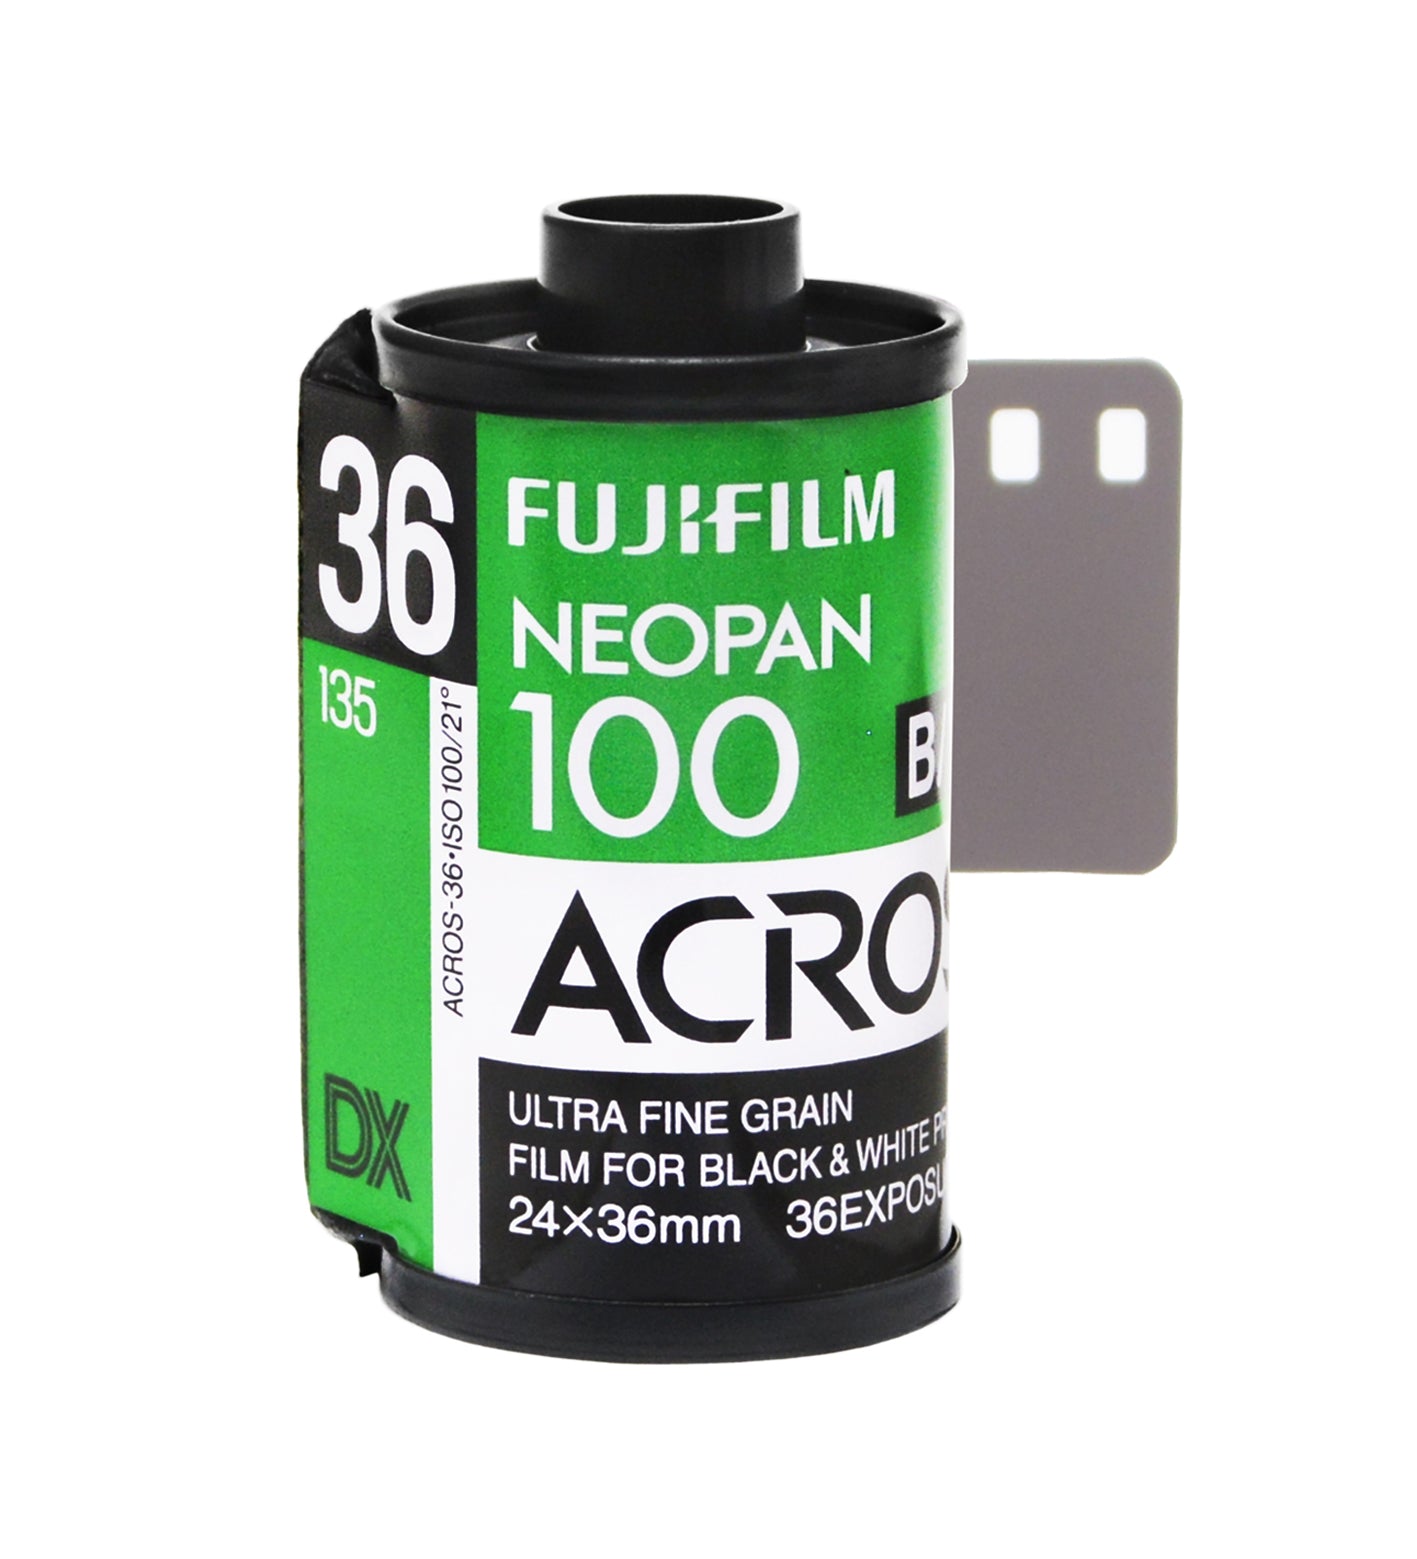 Fujifilm Neopan Acros 100 II 35mm Film 36 Exposures (£11.99 incl VAT)